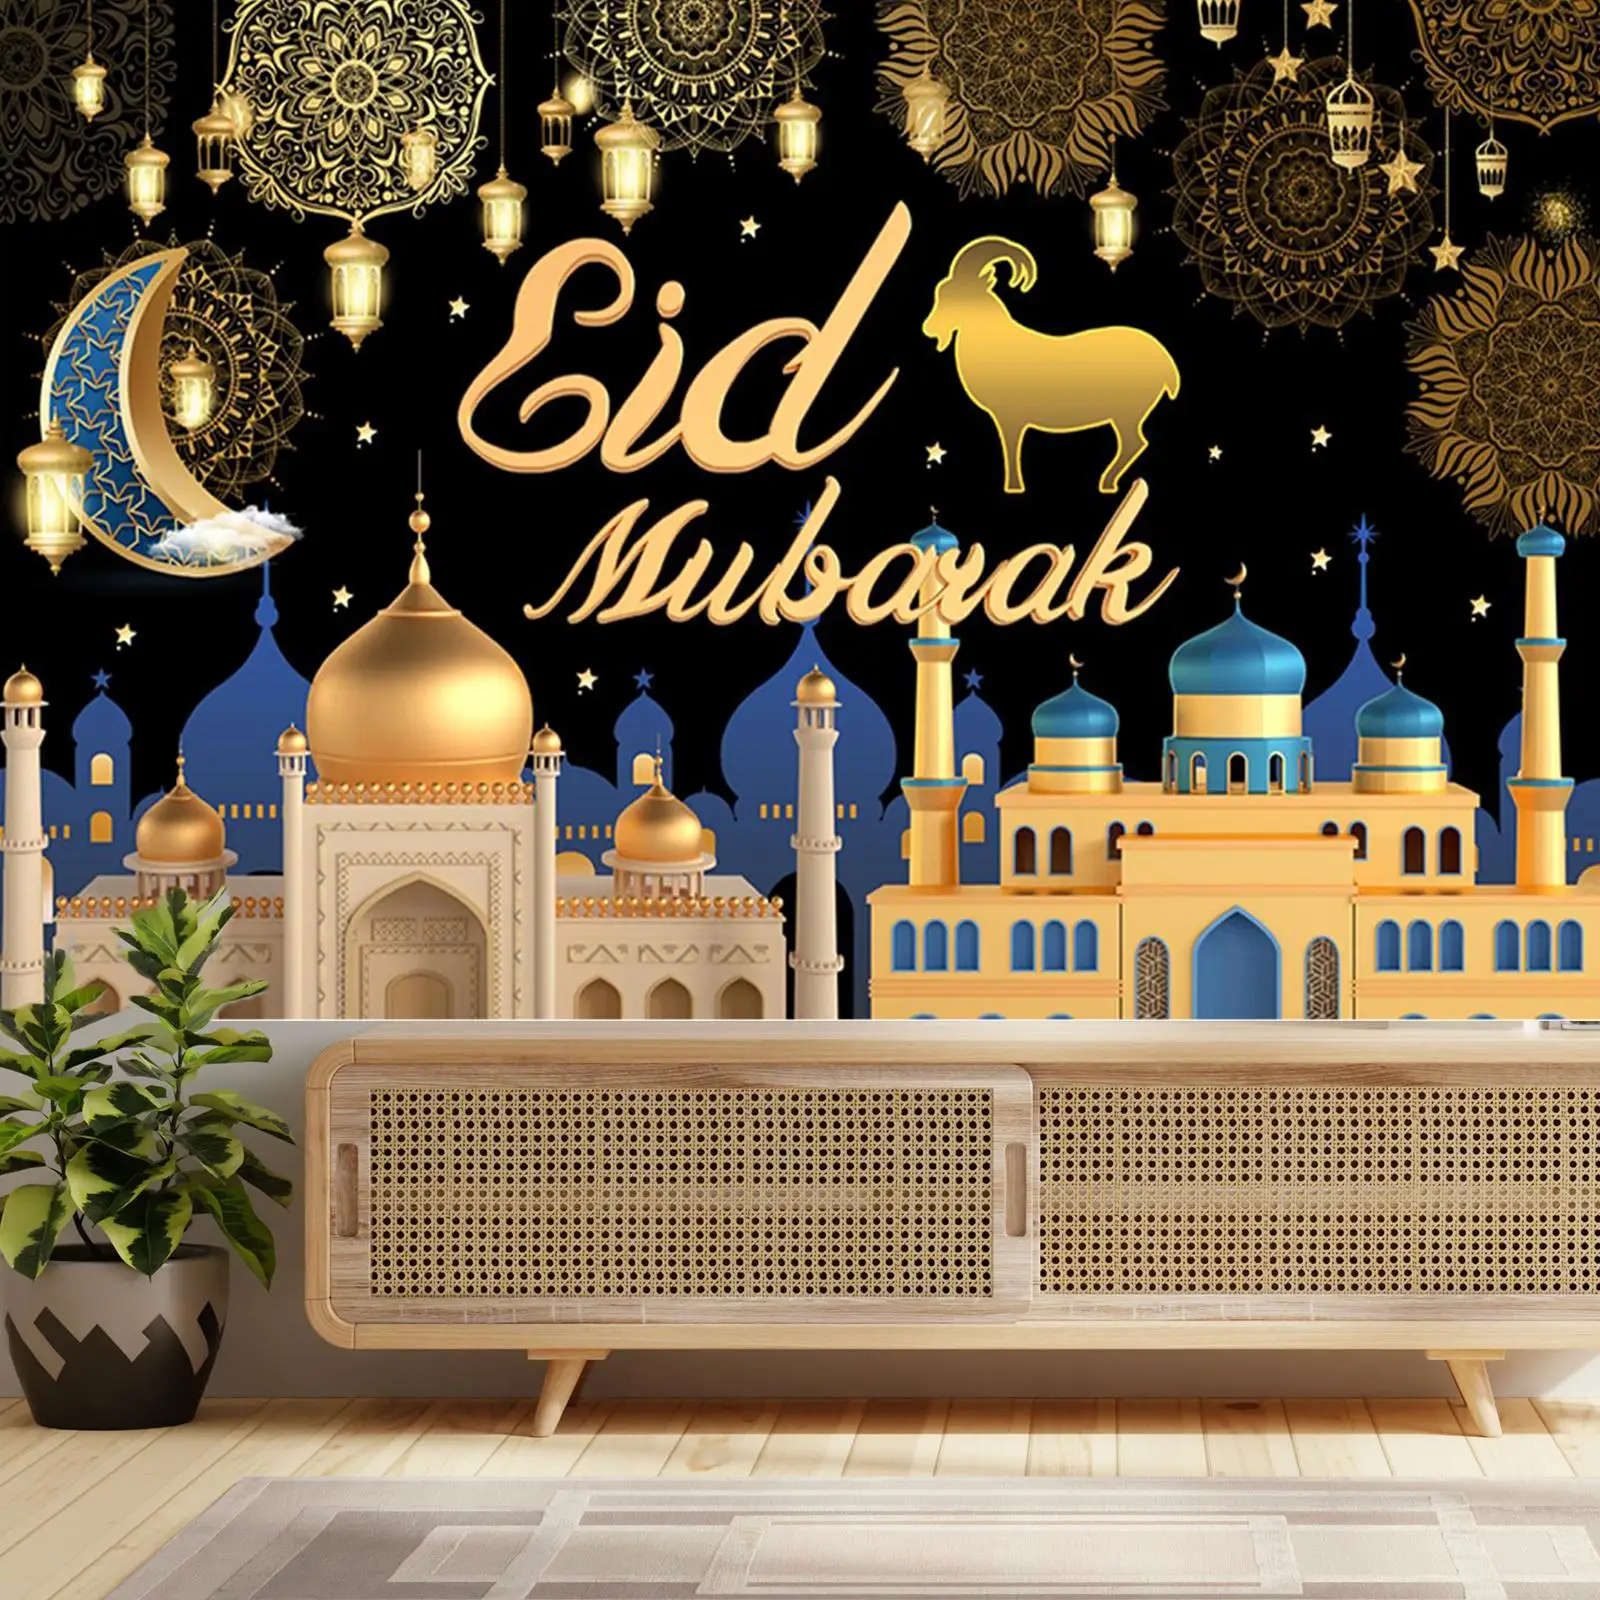 Eid Mubarak Party Backdrop Banner Large Fabric 3.6x5.9 for Festival Garden